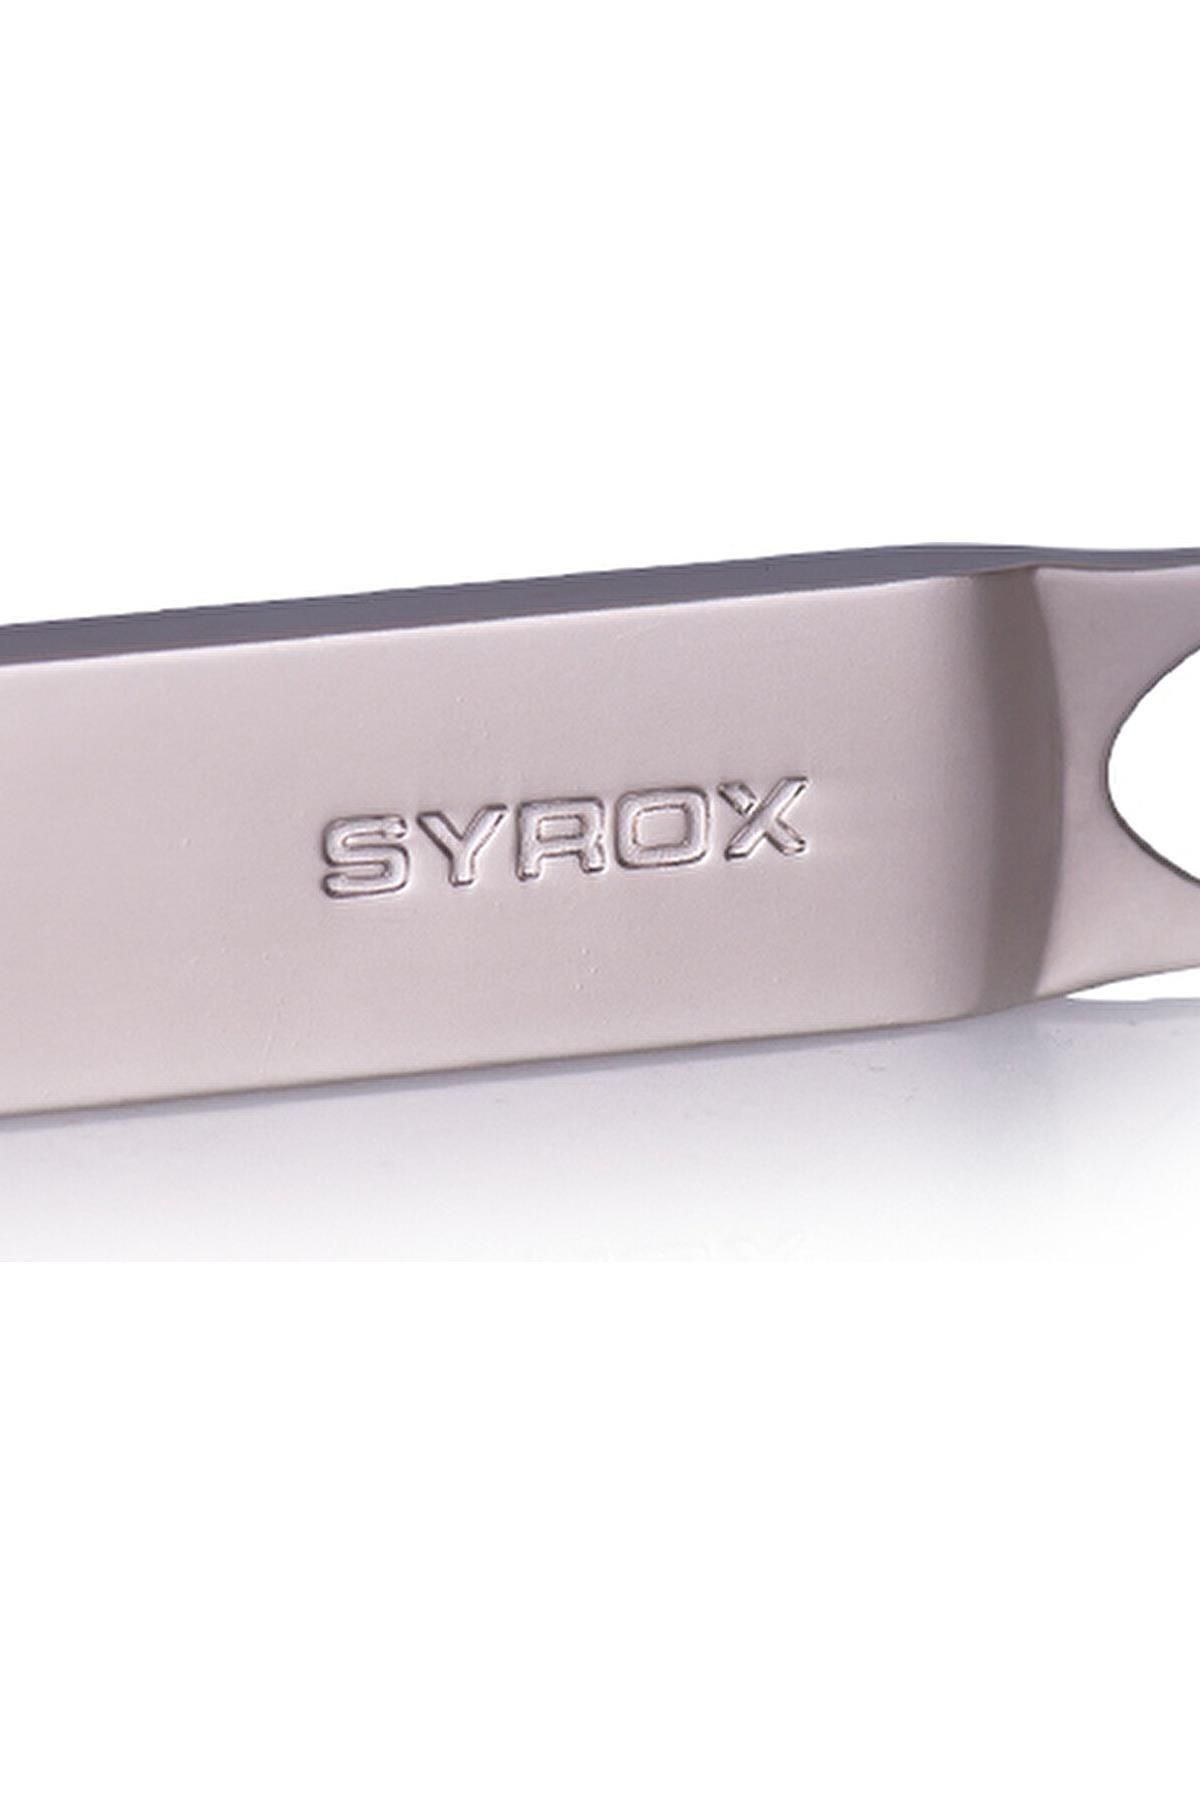 Syrox 64 Gb Metal 2 Usb Bellek Syx-Um64